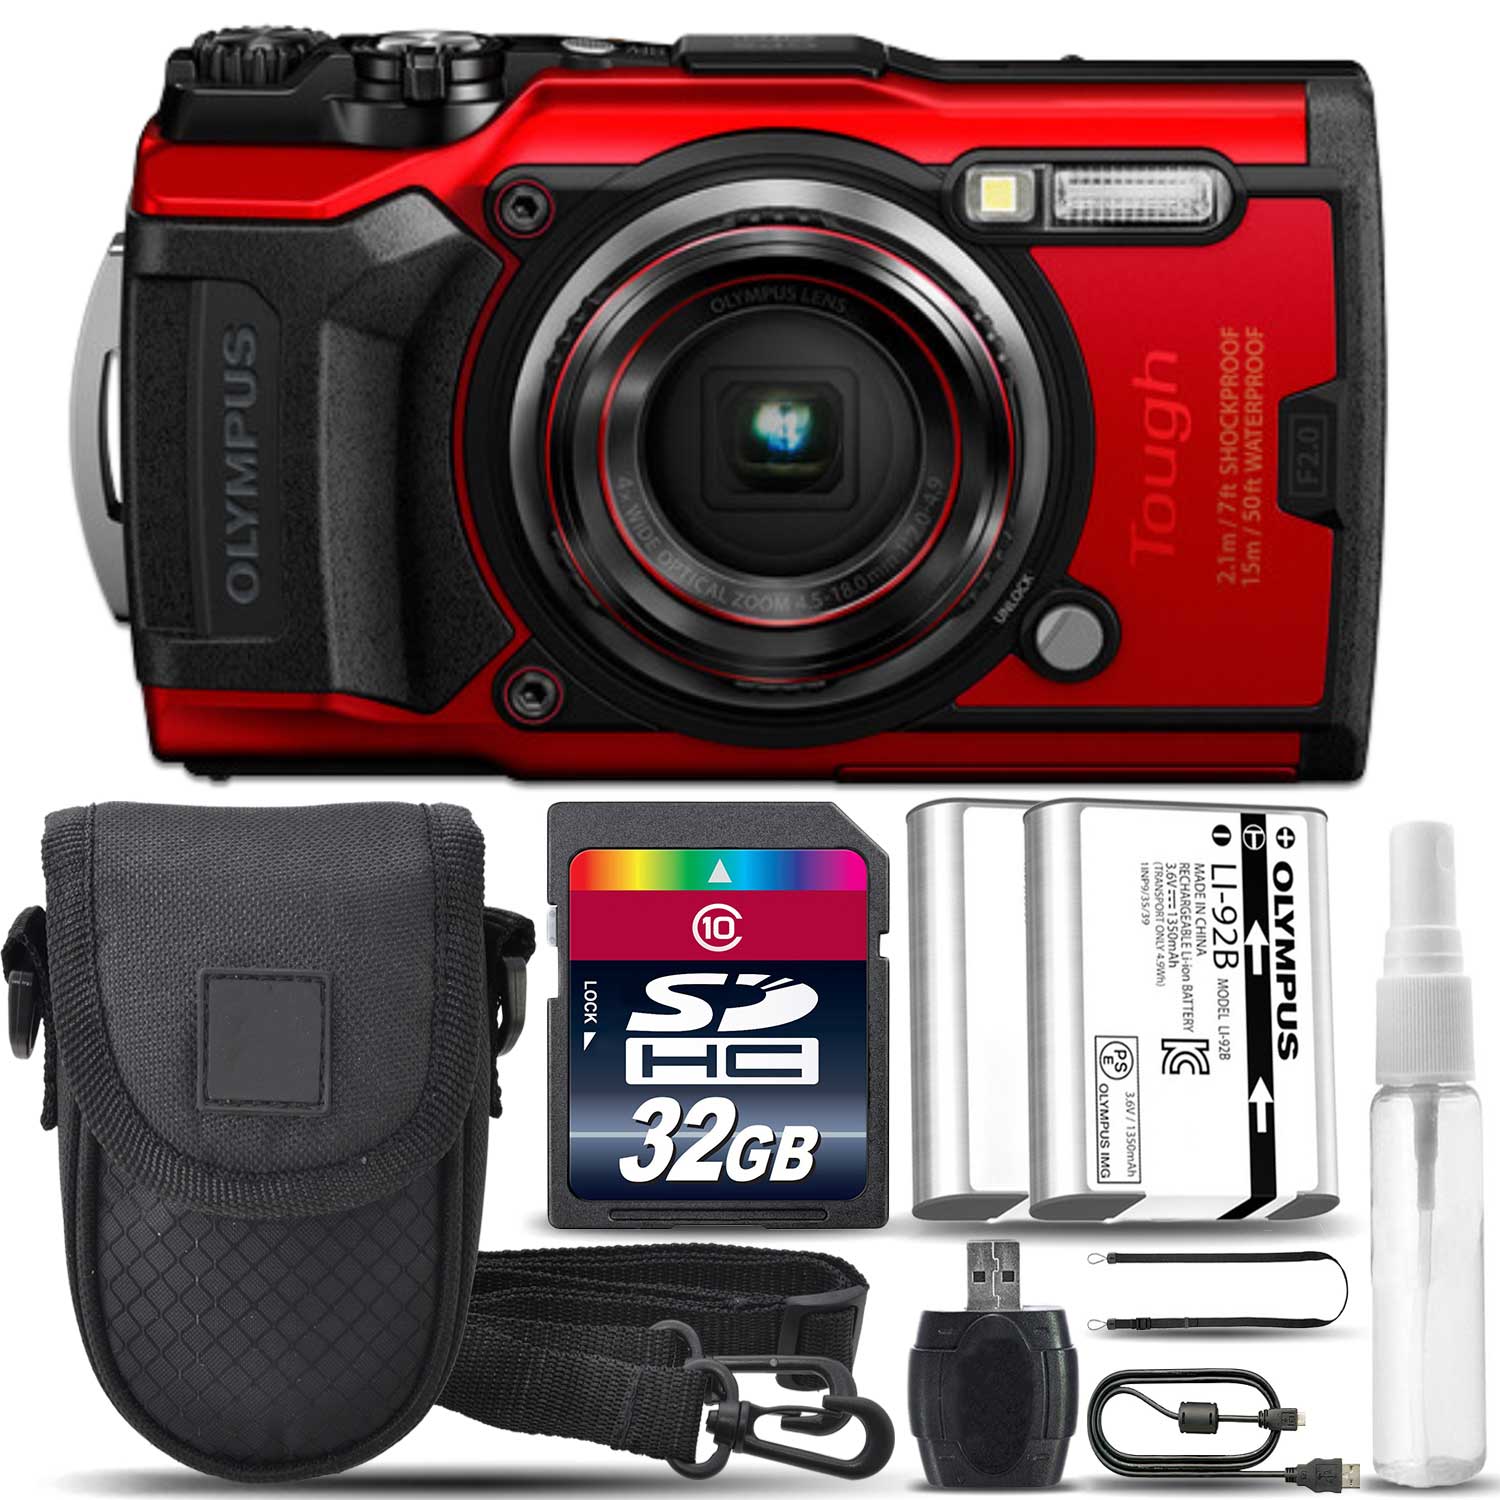 Stylus TOUGH TG-6 Digital Waterproof Camera Red + Case +EXT BATT + 32GB *FREE SHIPPING*